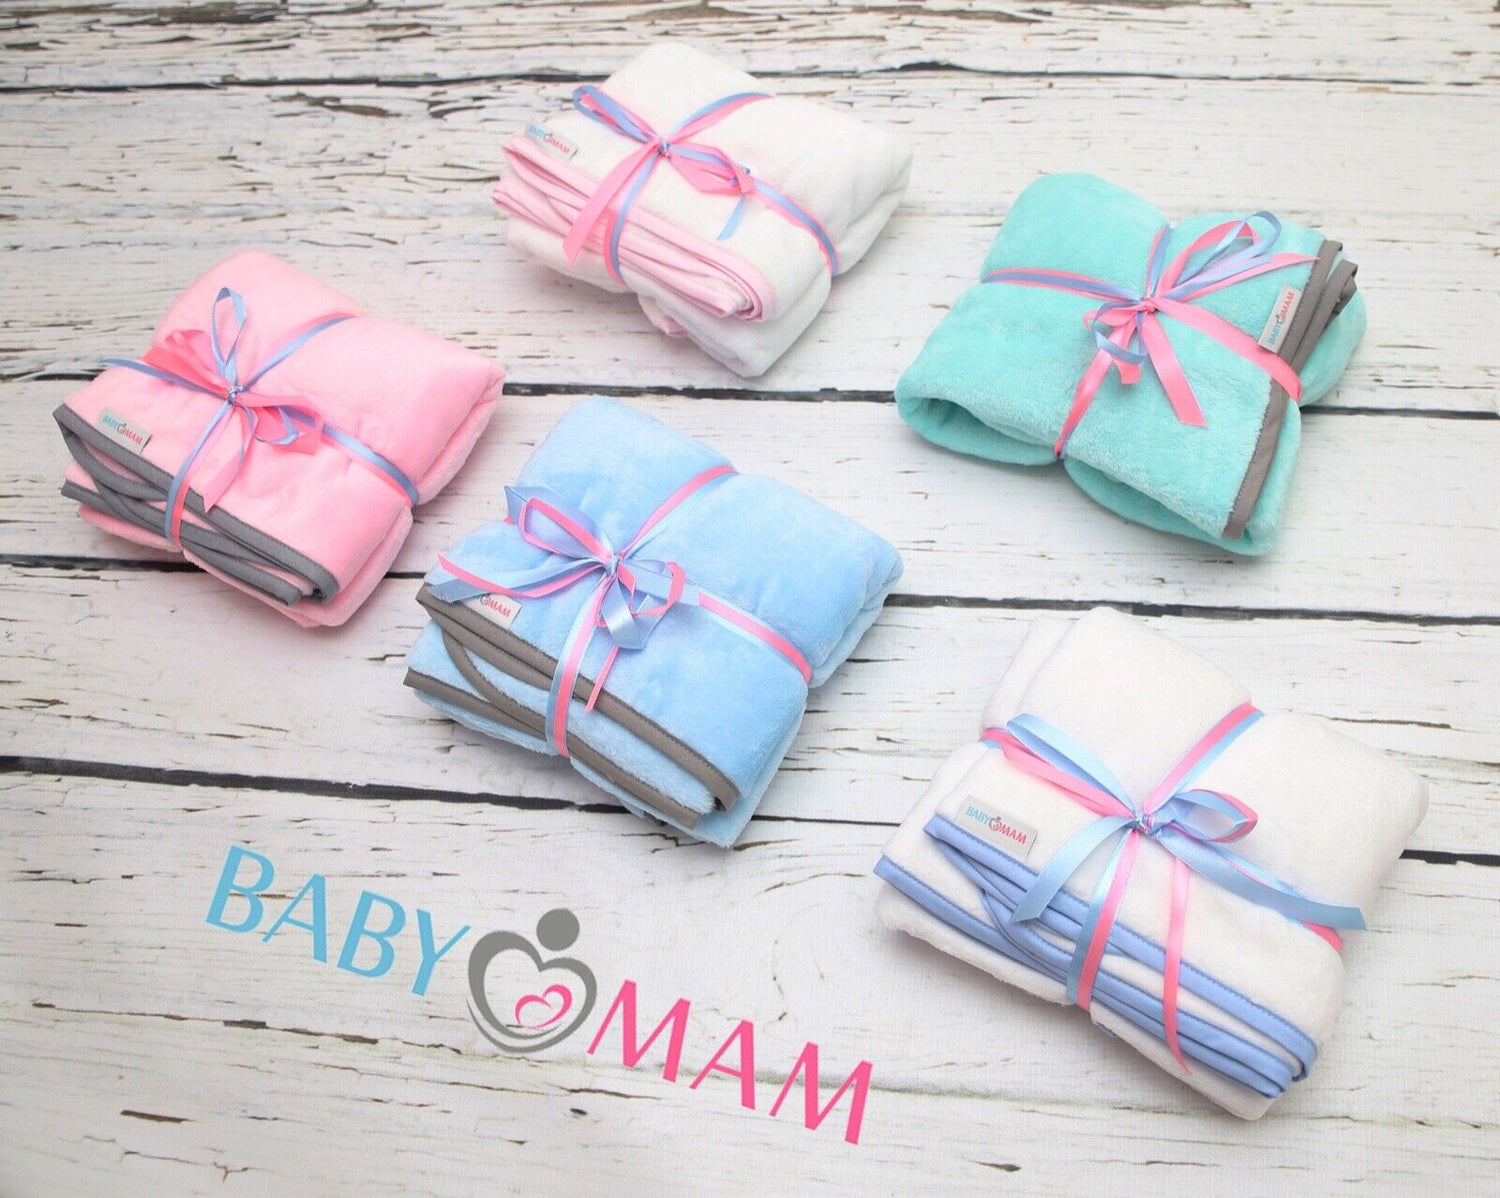 Baby blanket Super soft plush infant nursery cosy baby gift 75x100cm - Mint/Grey